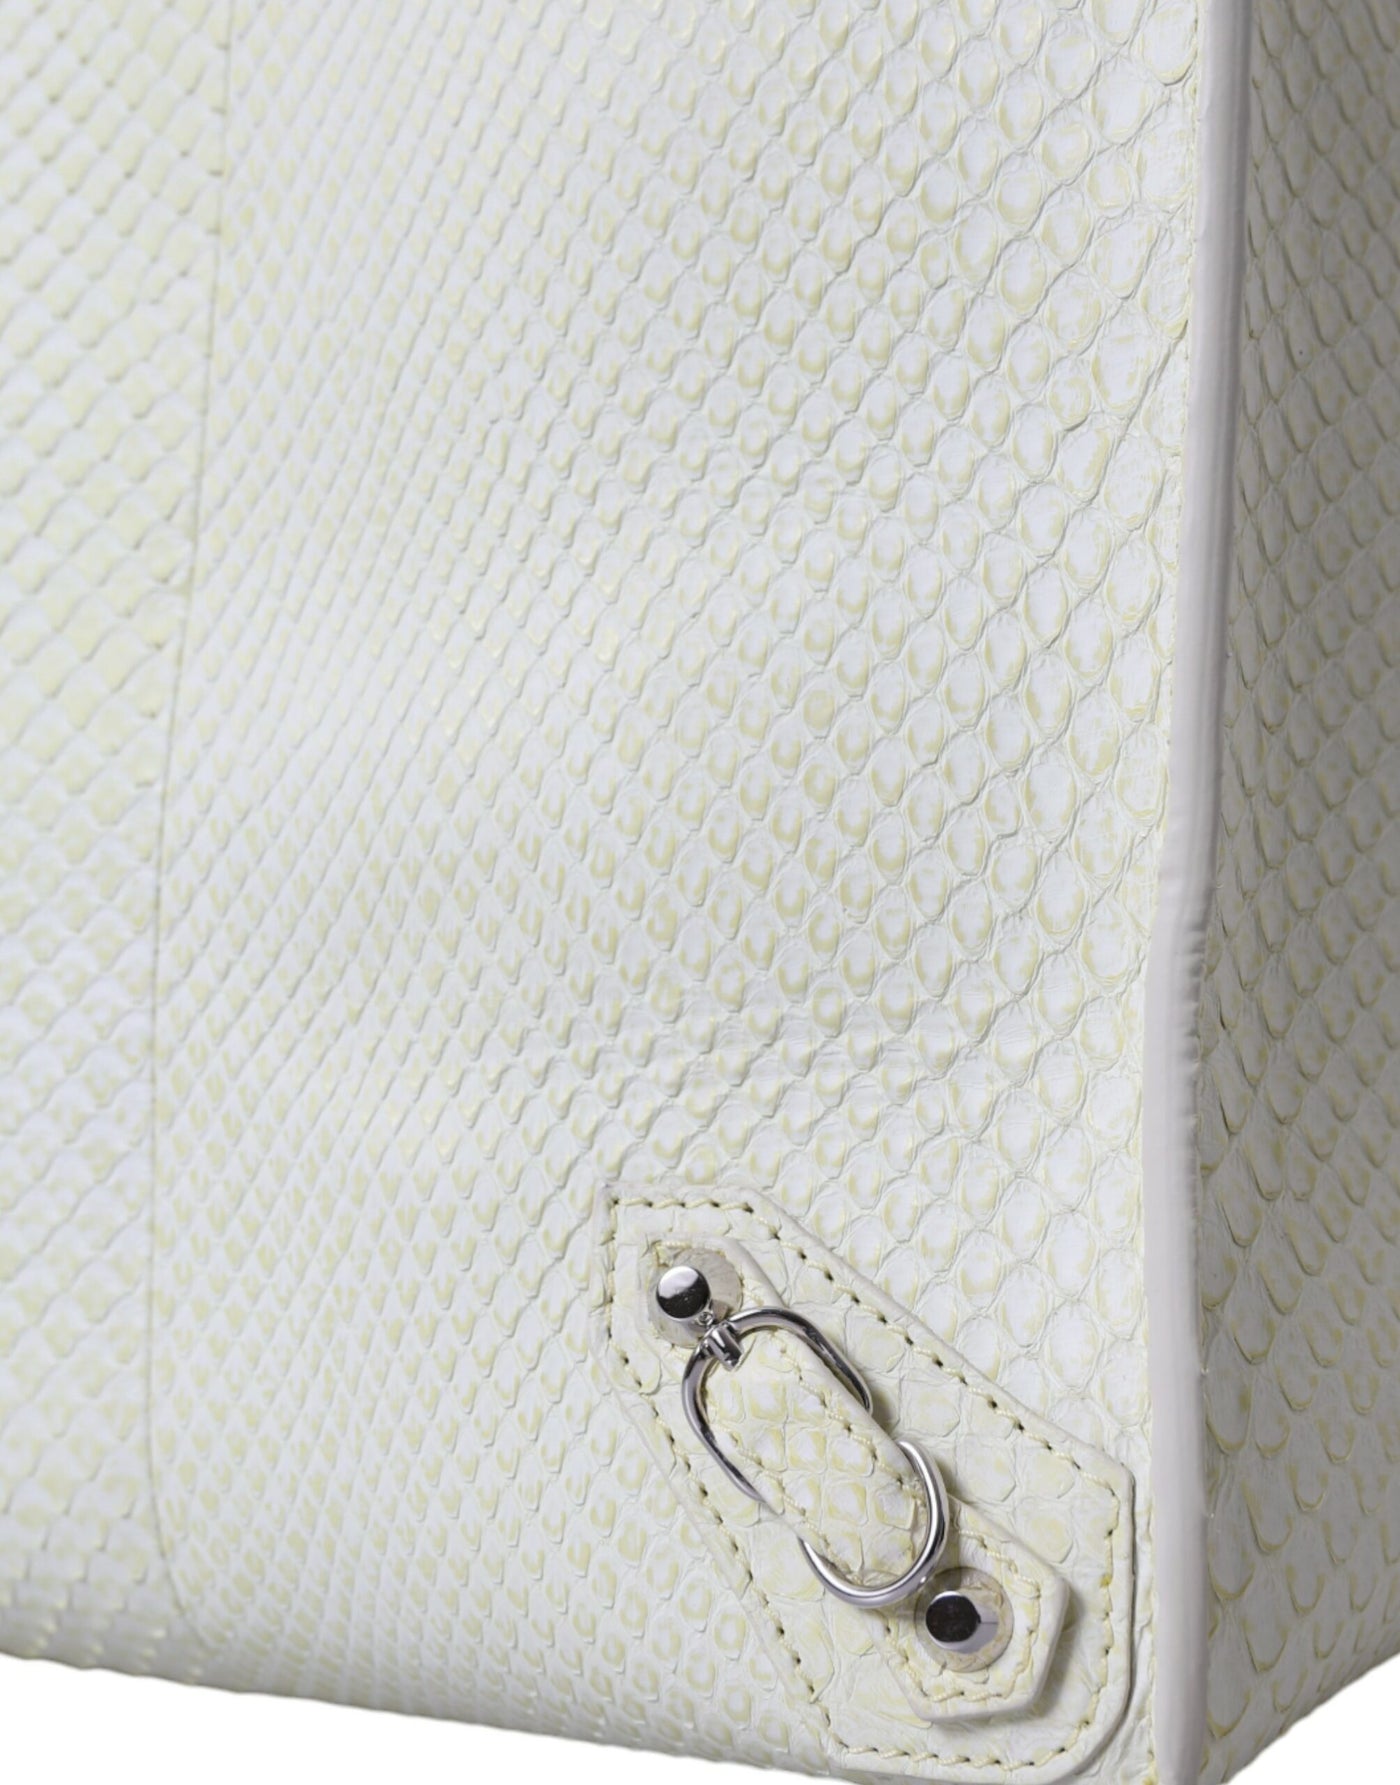 Balenciaga Chic Python Leather Tote in White & Yellow